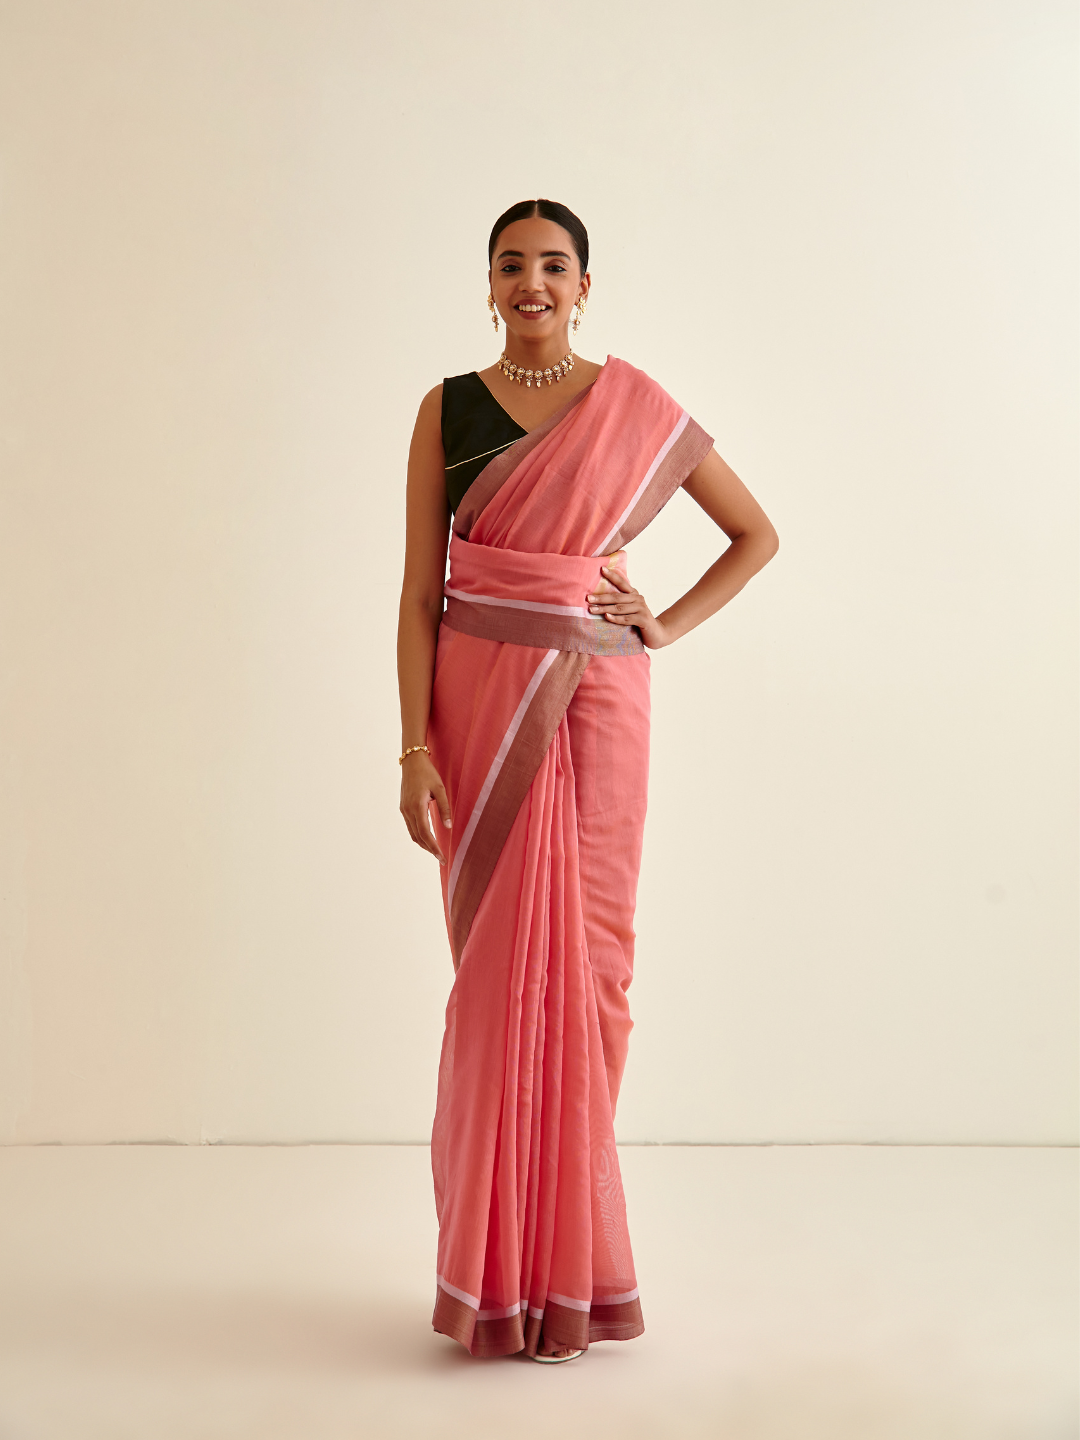 Banarasi Woven sari with contrasting border- Coral Pink